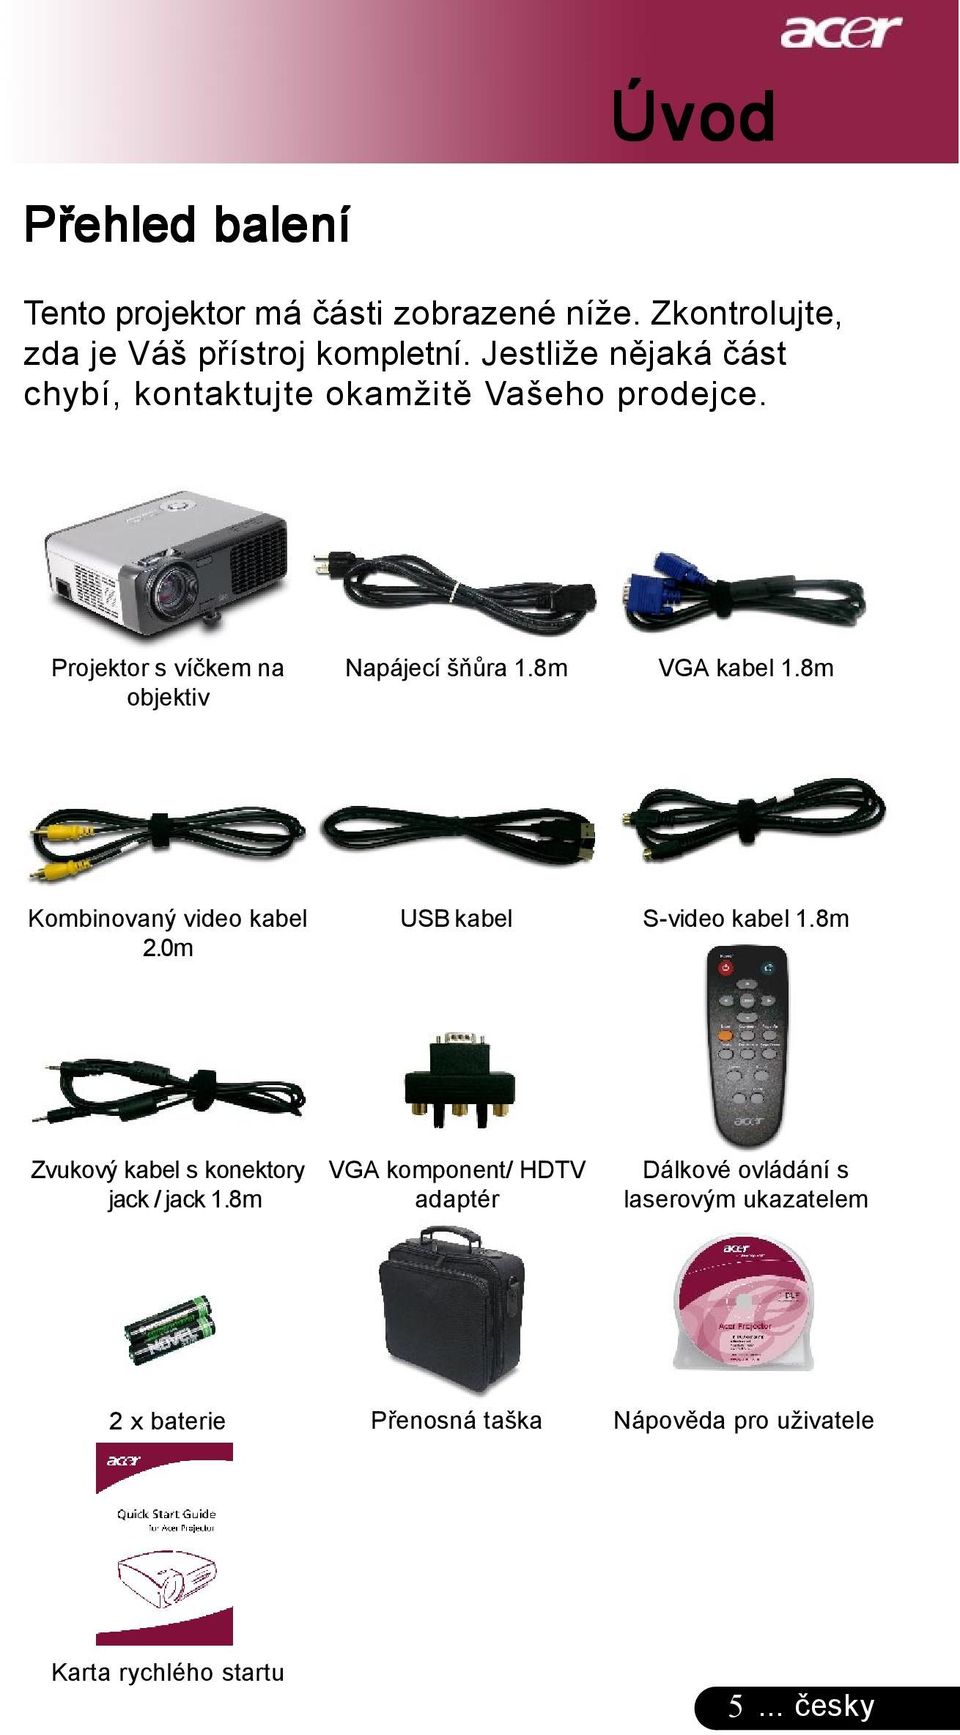 8m VGA kabel 1.8m Kombinovaný video kabel 2.0m USB kabel S-video kabel 1.8m Zvukový kabel s konektory jack / jack 1.